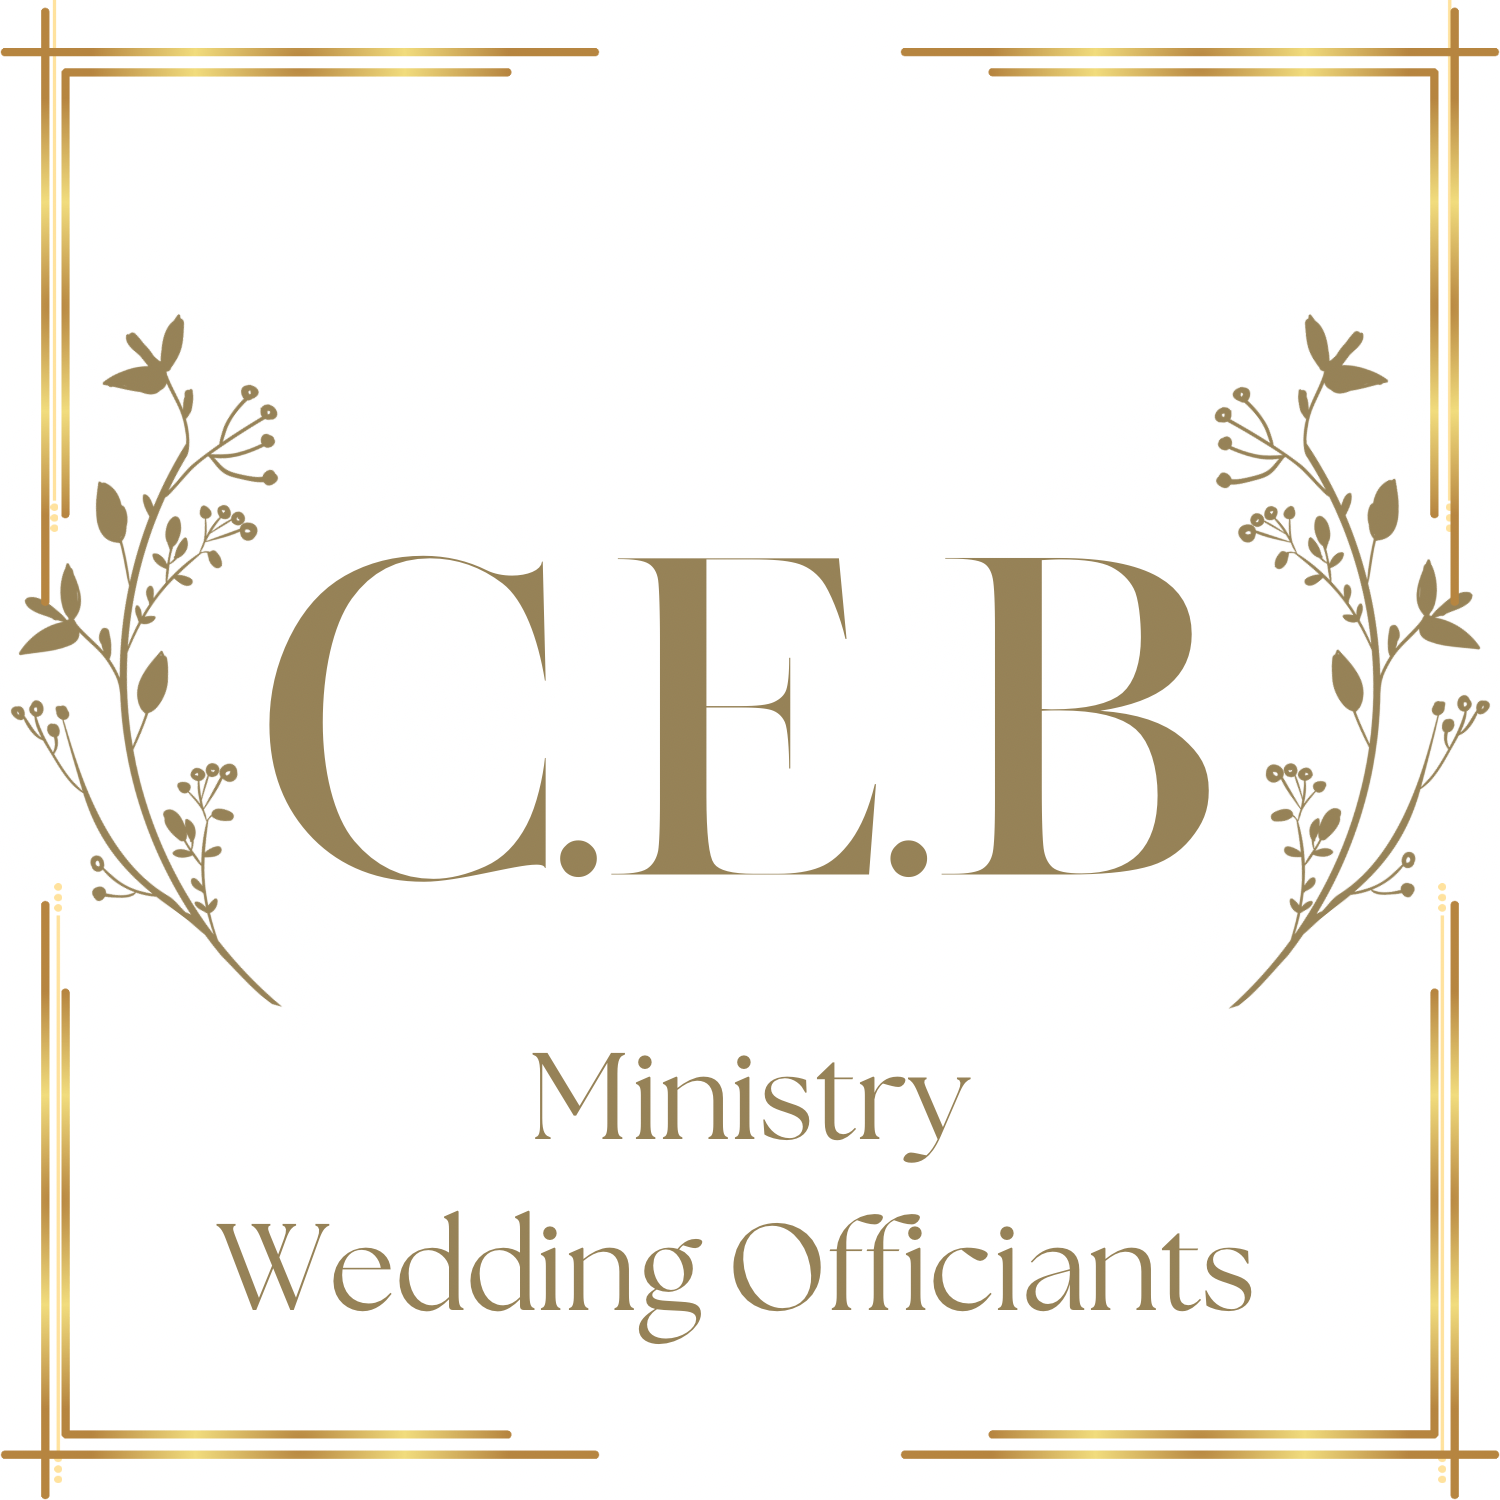 C.E.B. Ministry Wedding Officiant